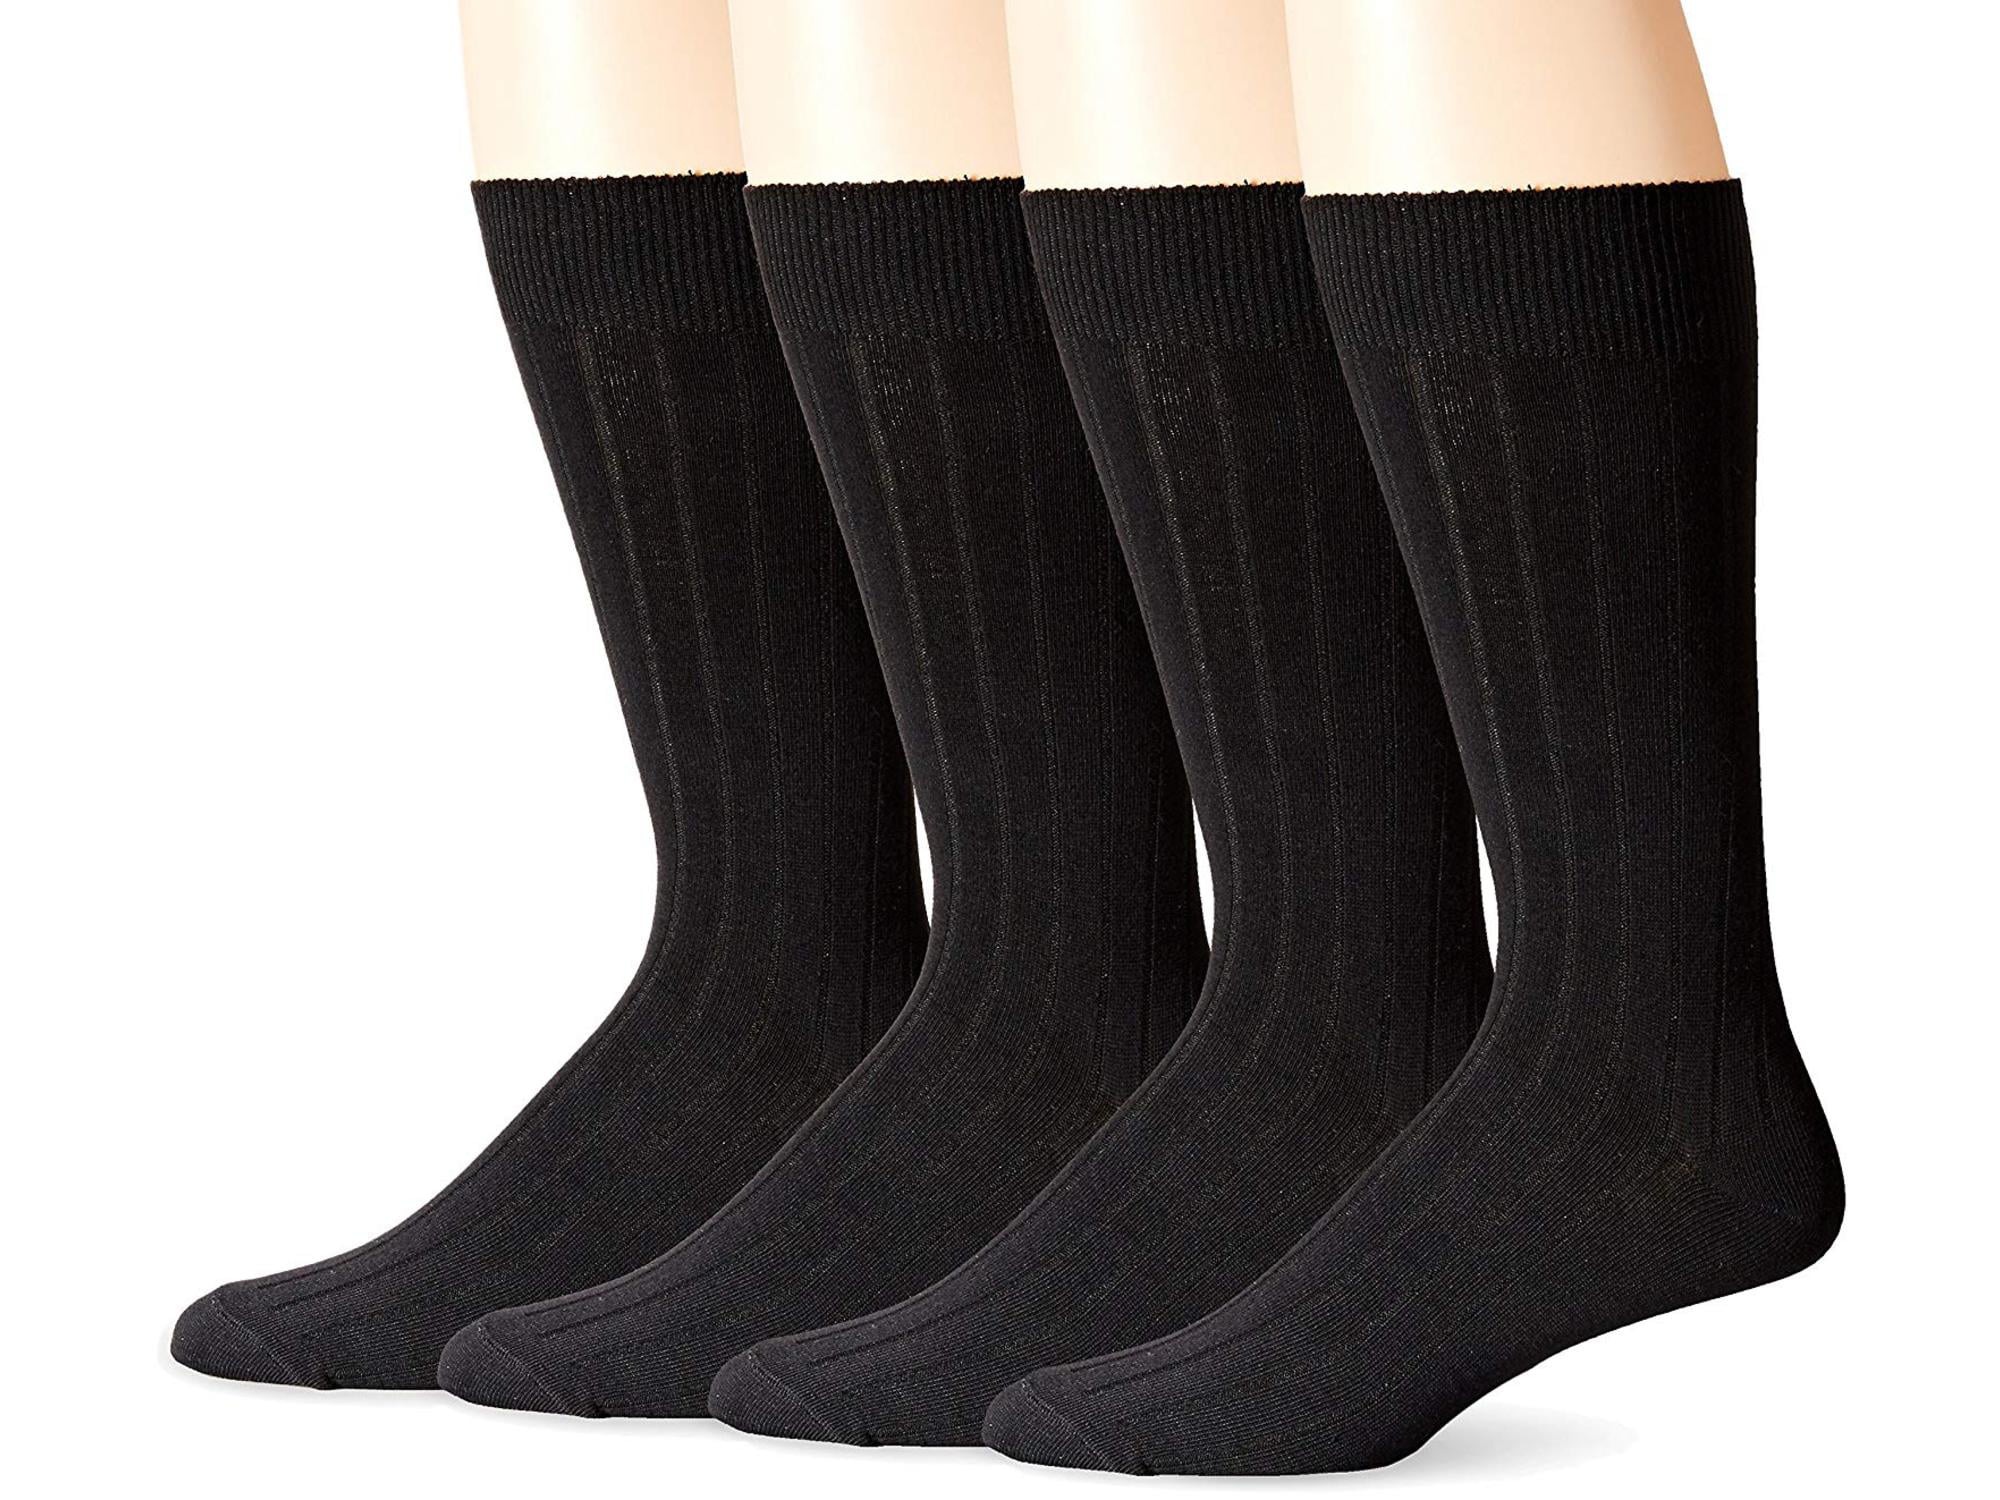 NEW Adolfo 4 Pack Black Patterned Dress Socks Size 6.5-12 G1-55 